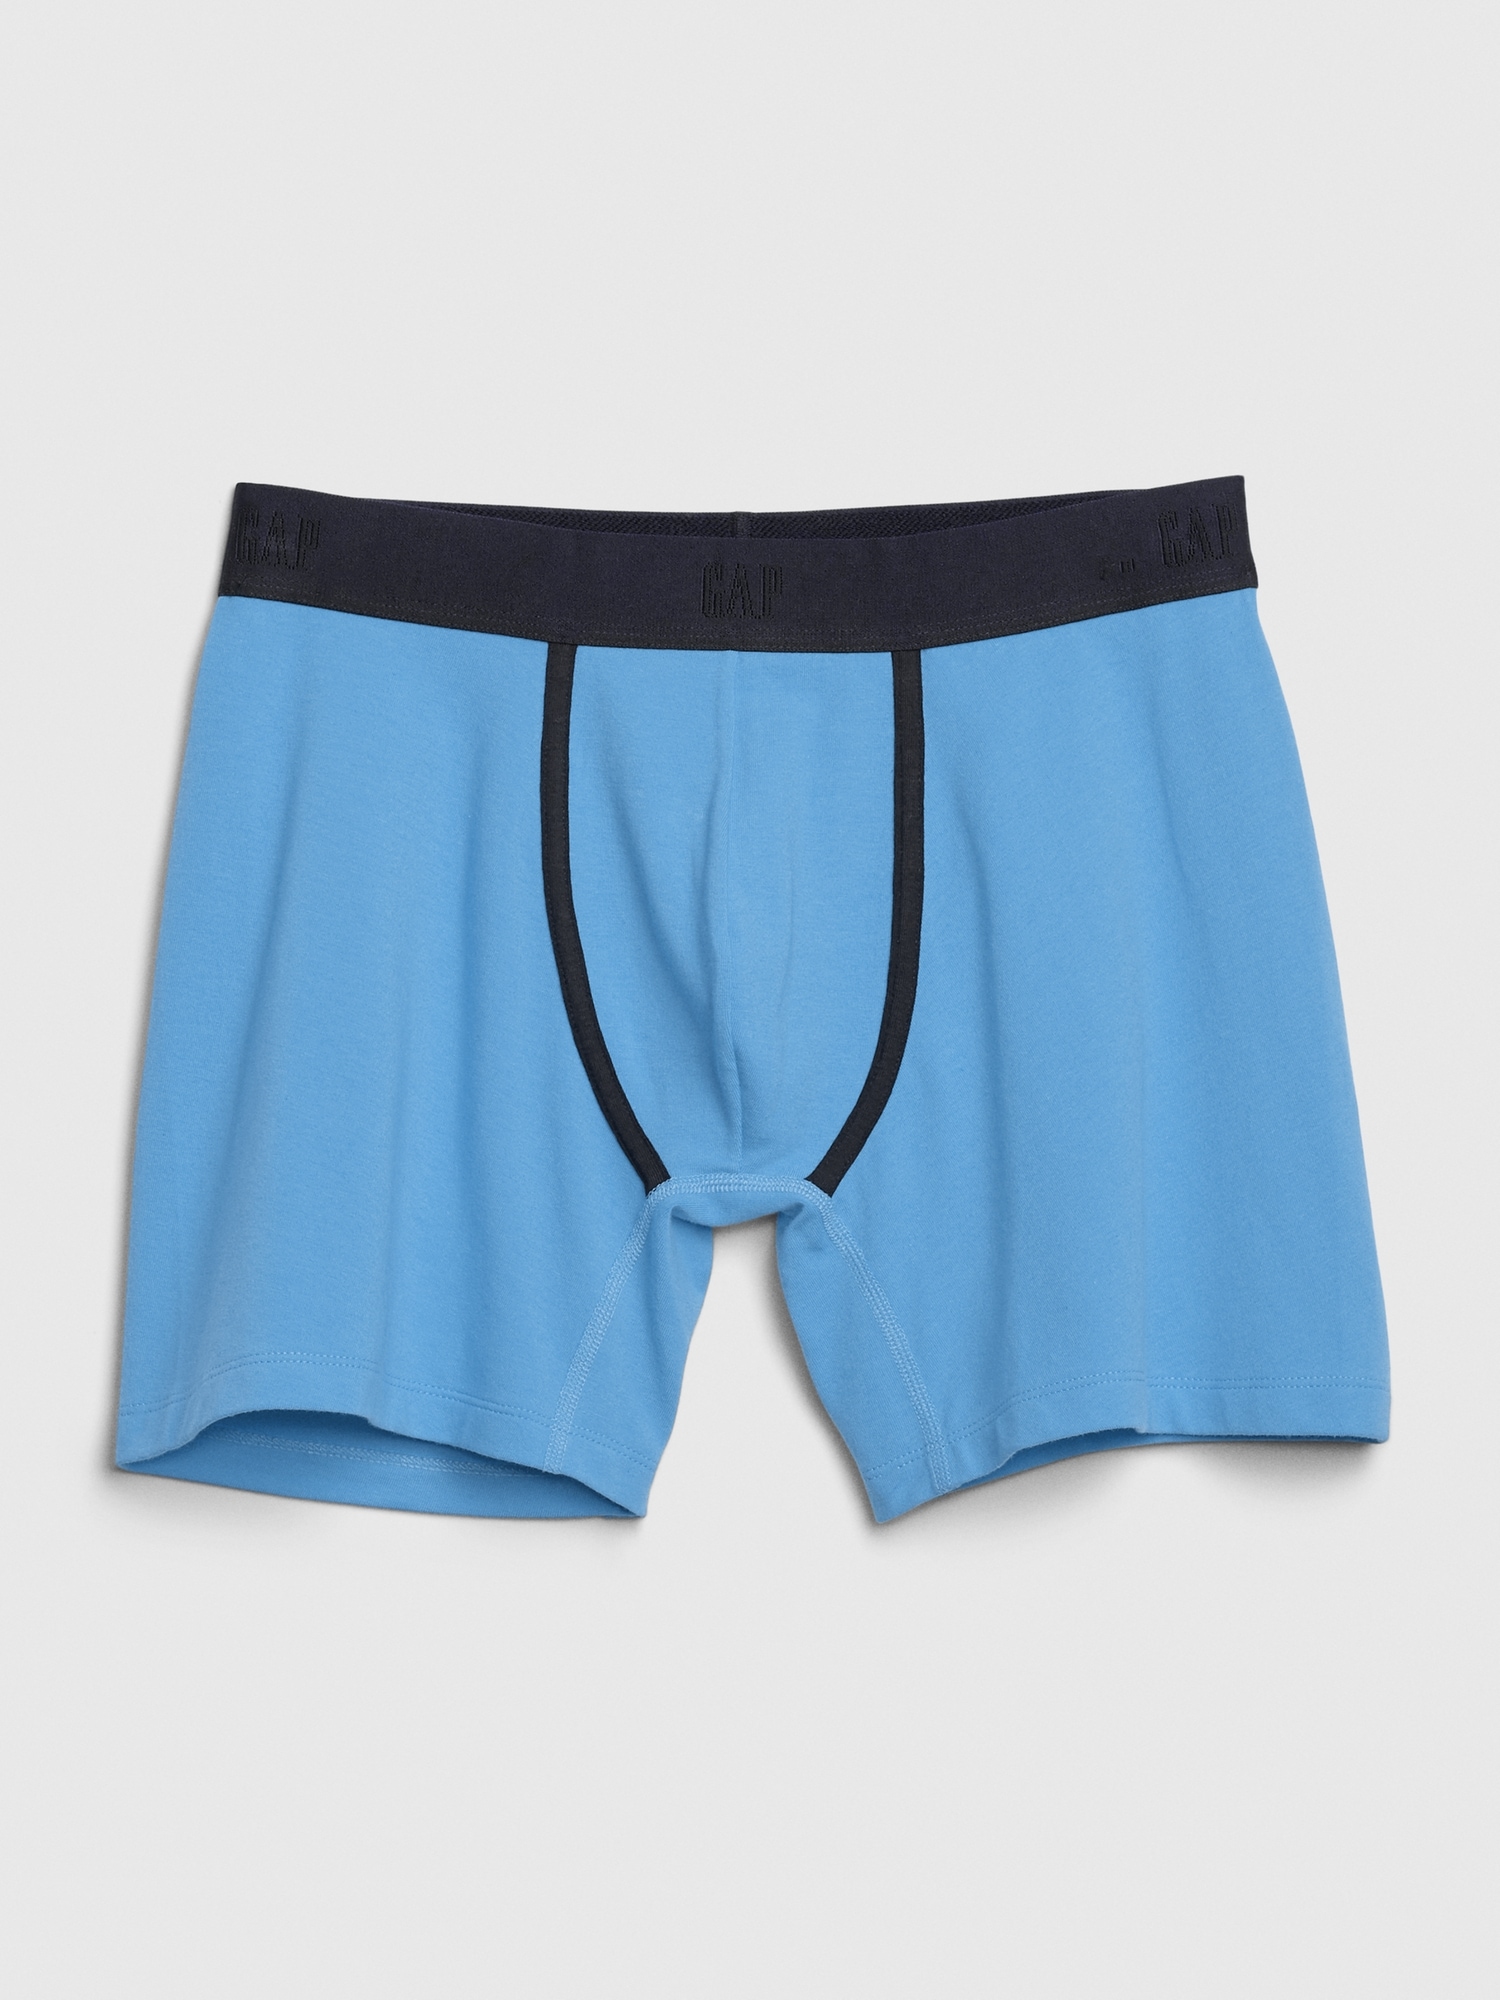 GAP, Underwear & Socks, Gap Cotton Stretch Boxer Briefs Xlarge Mens 3  Pack Xl 384 Multicolor New